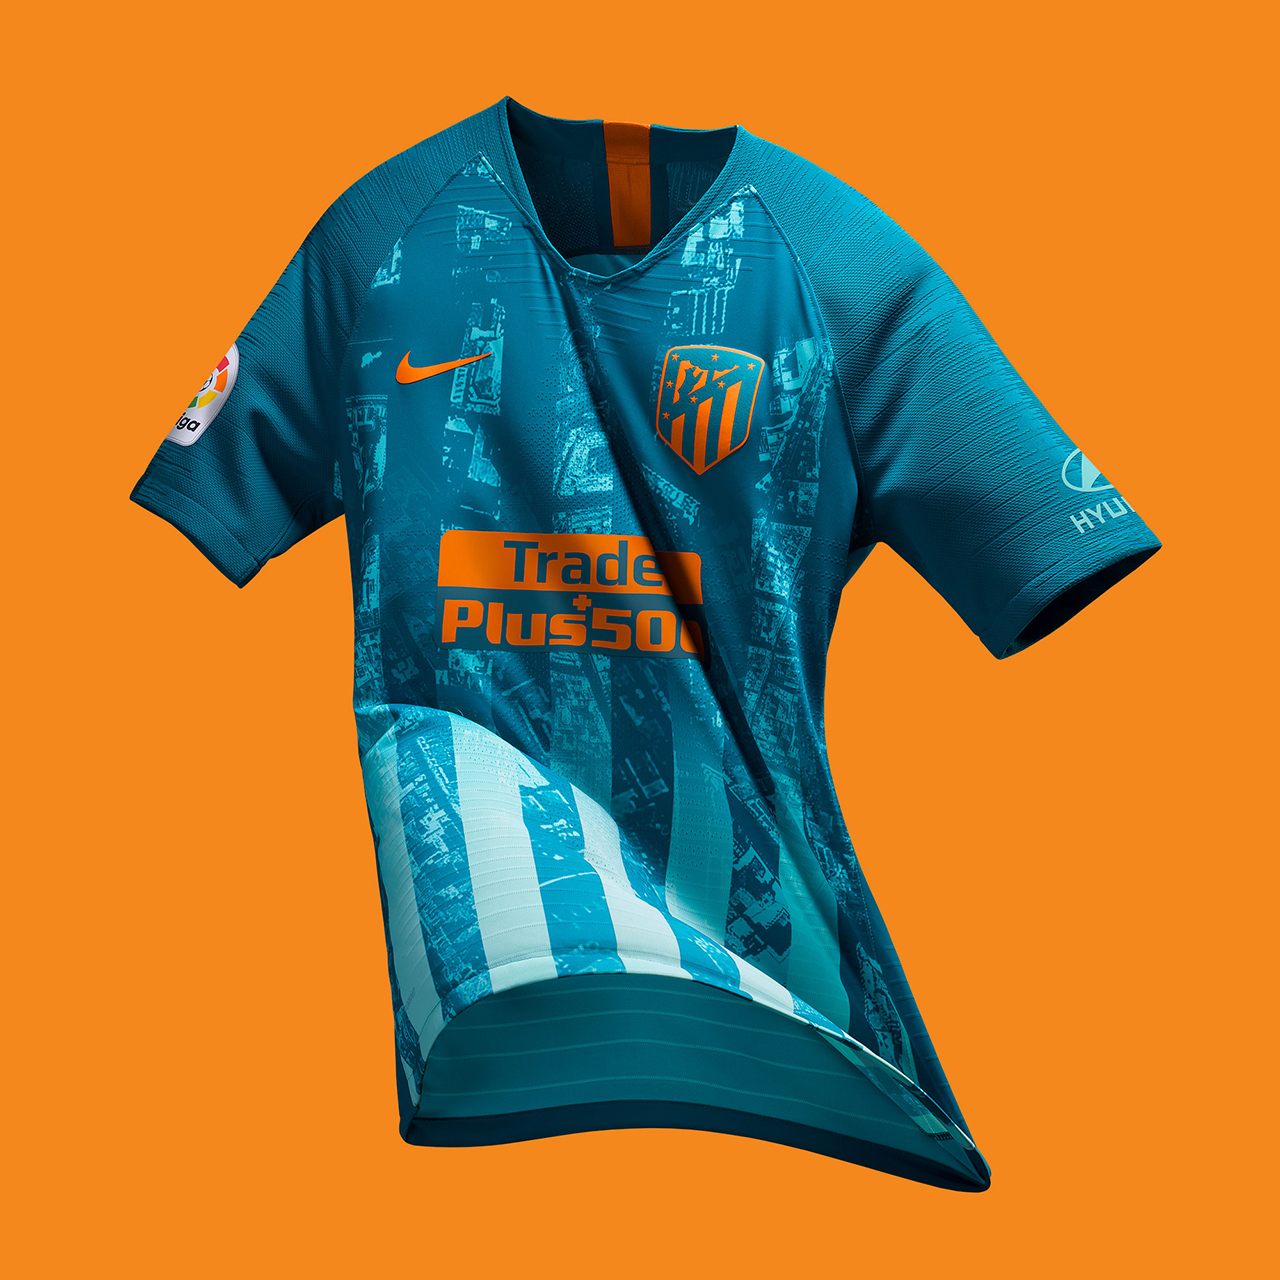 Tercera camiseta Nike del Atlético de Madrid 2018 19